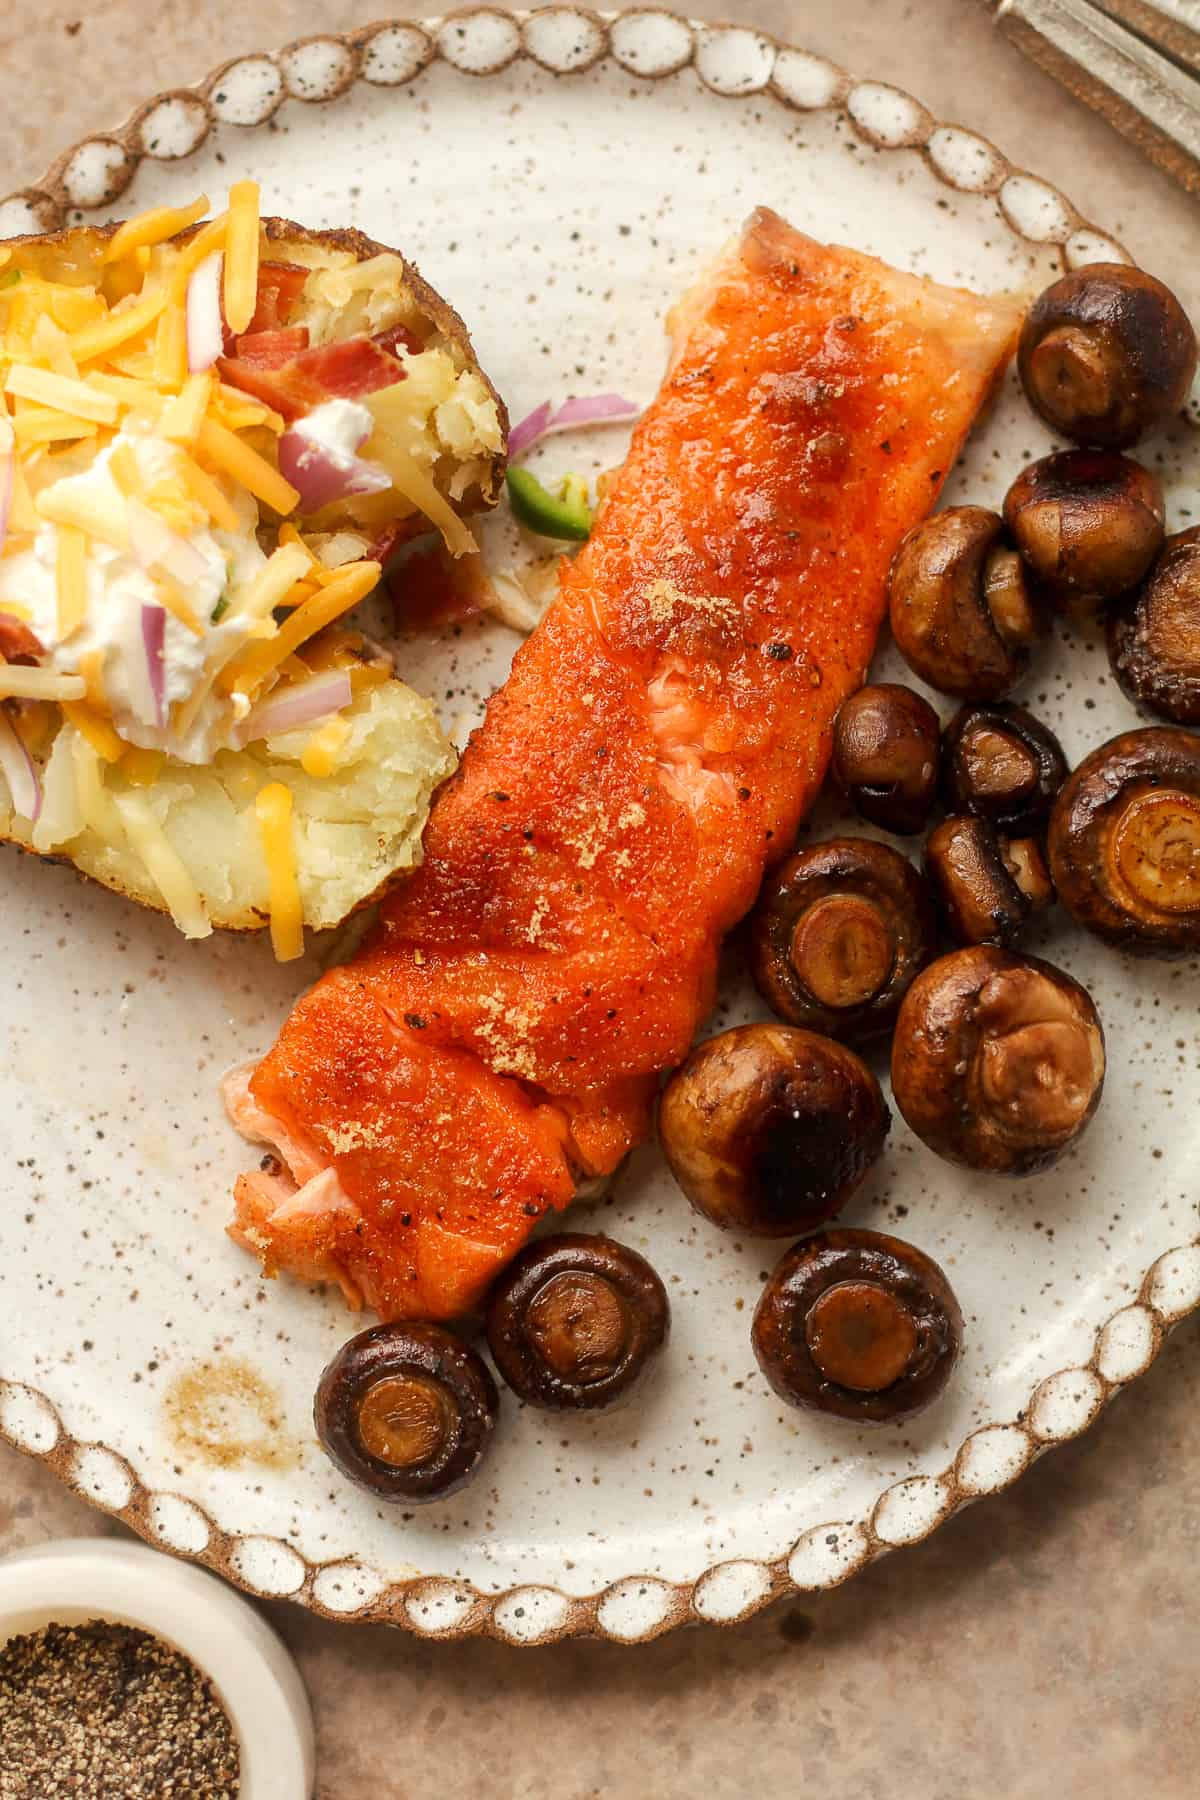 A plate of smoked salmon, sauteed potatoes, and a smoked potato.